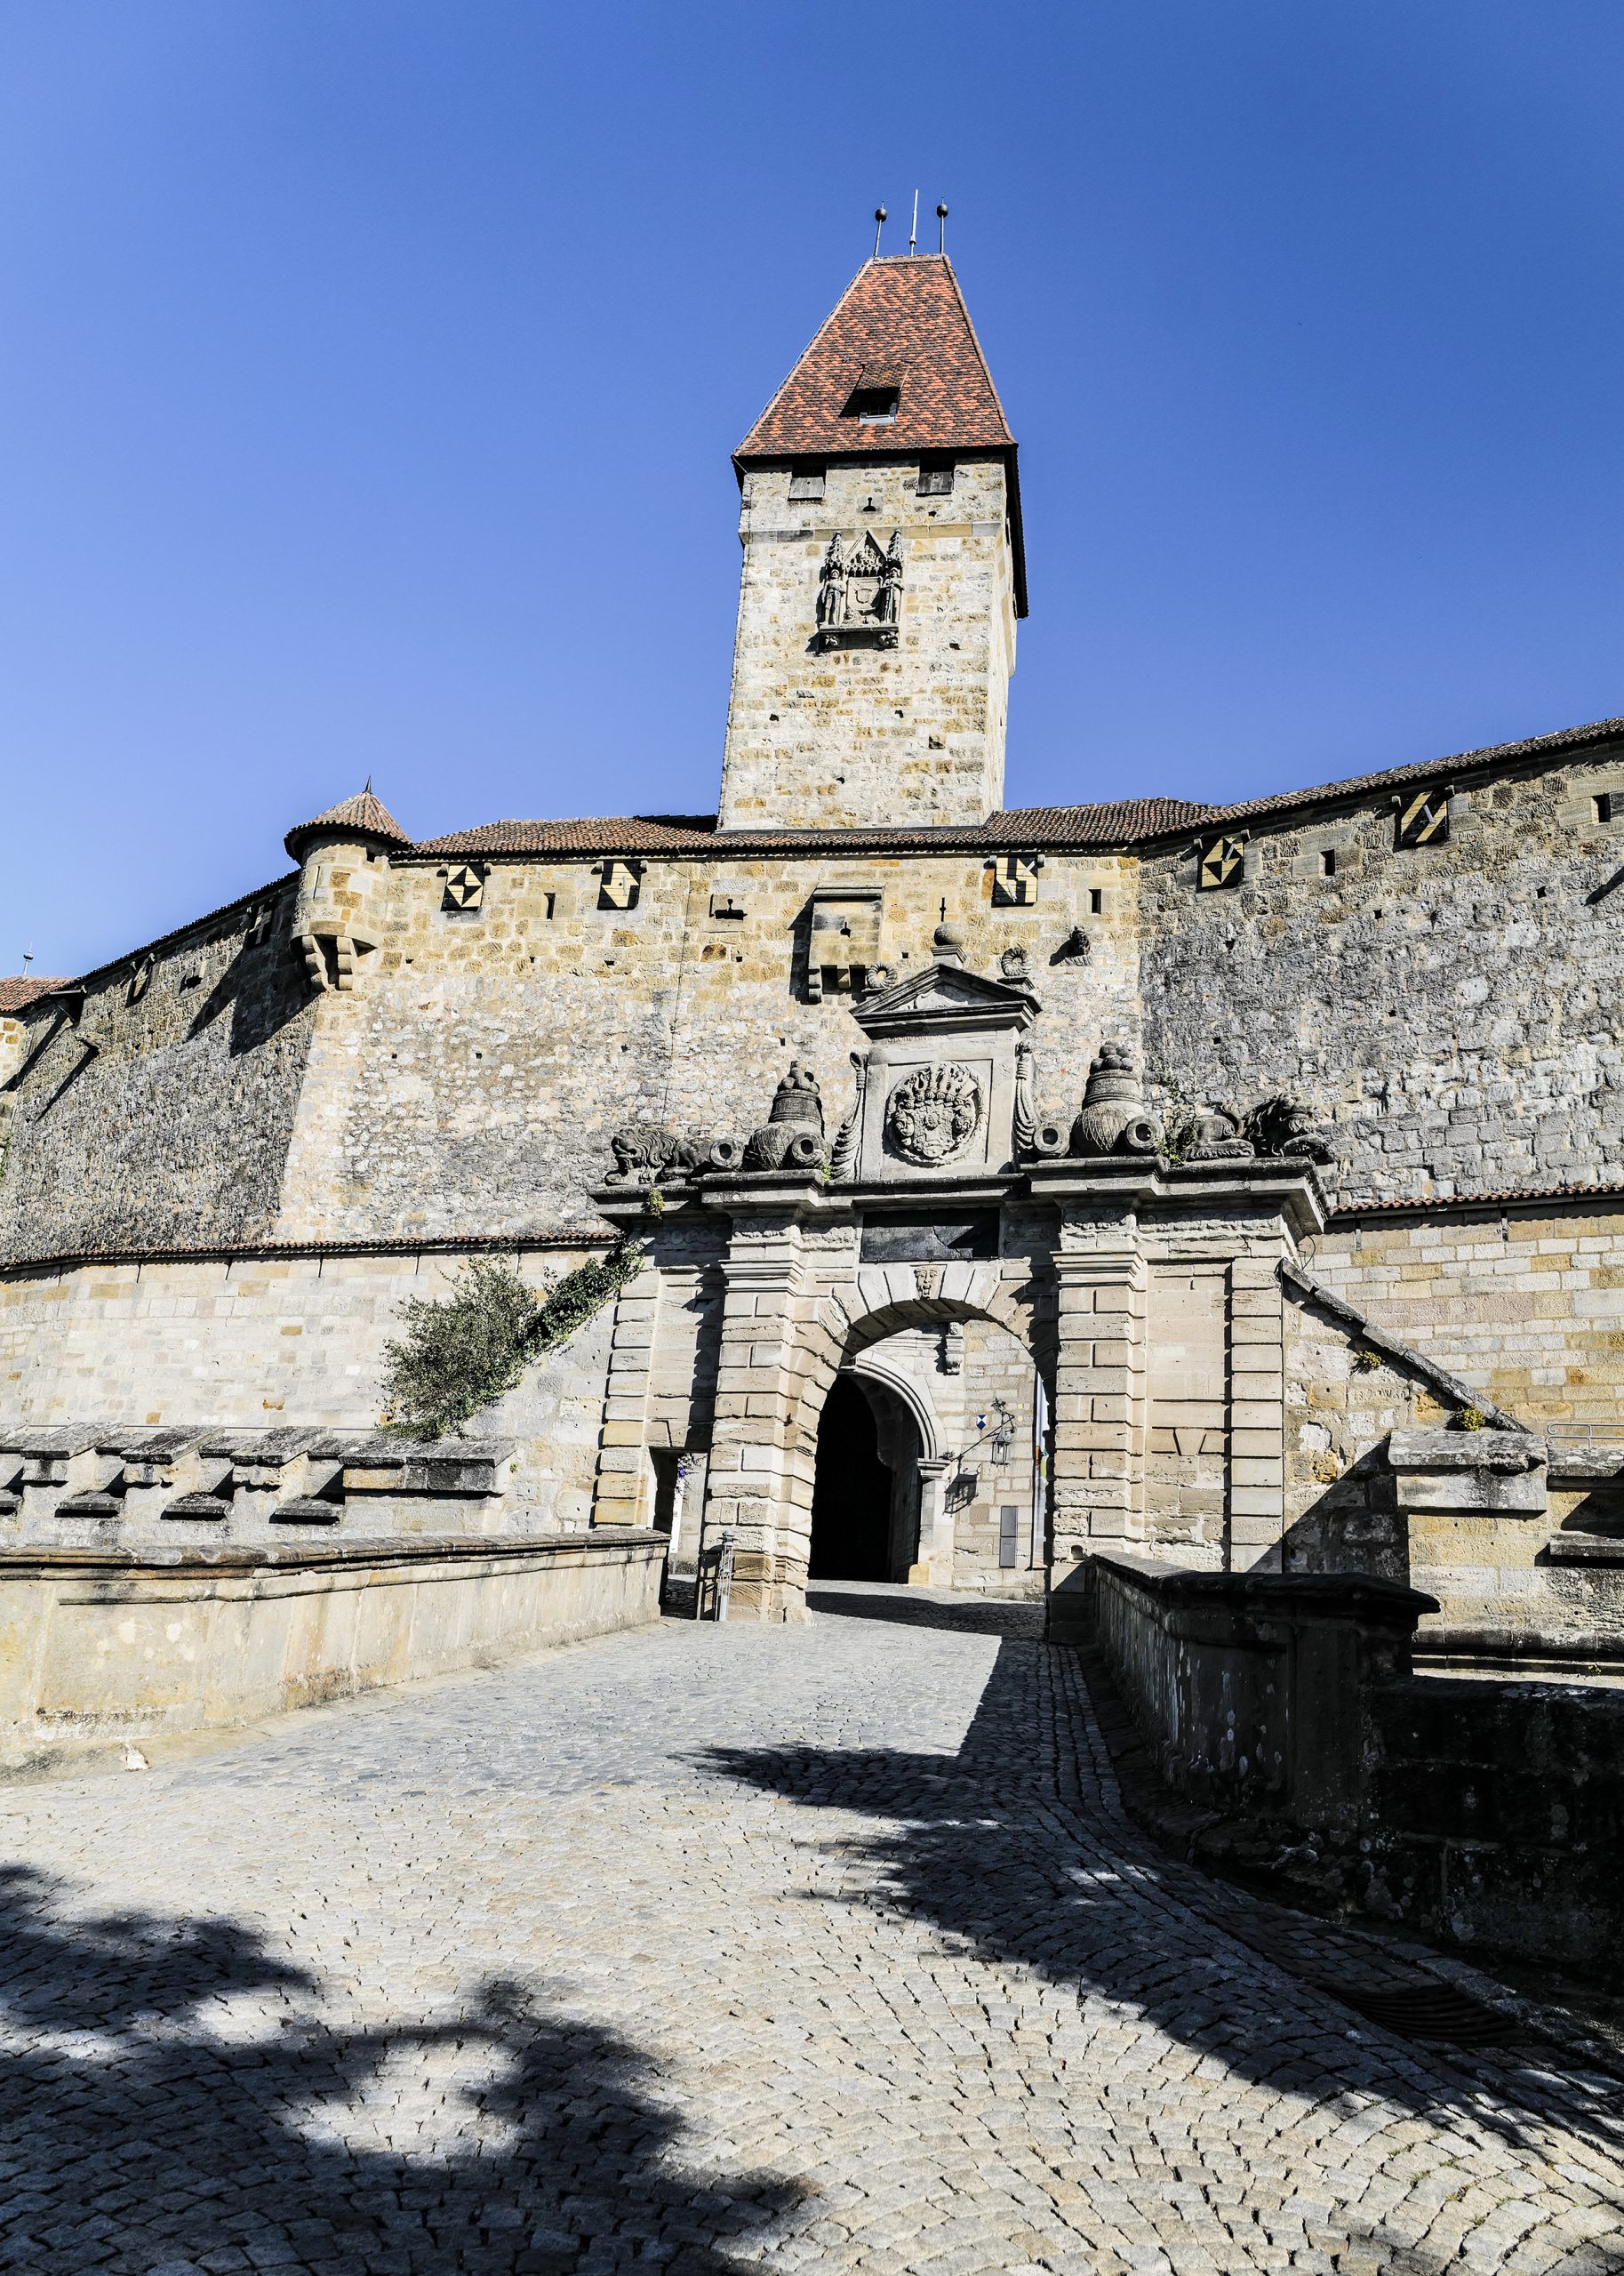 Festung Coburg Entrance